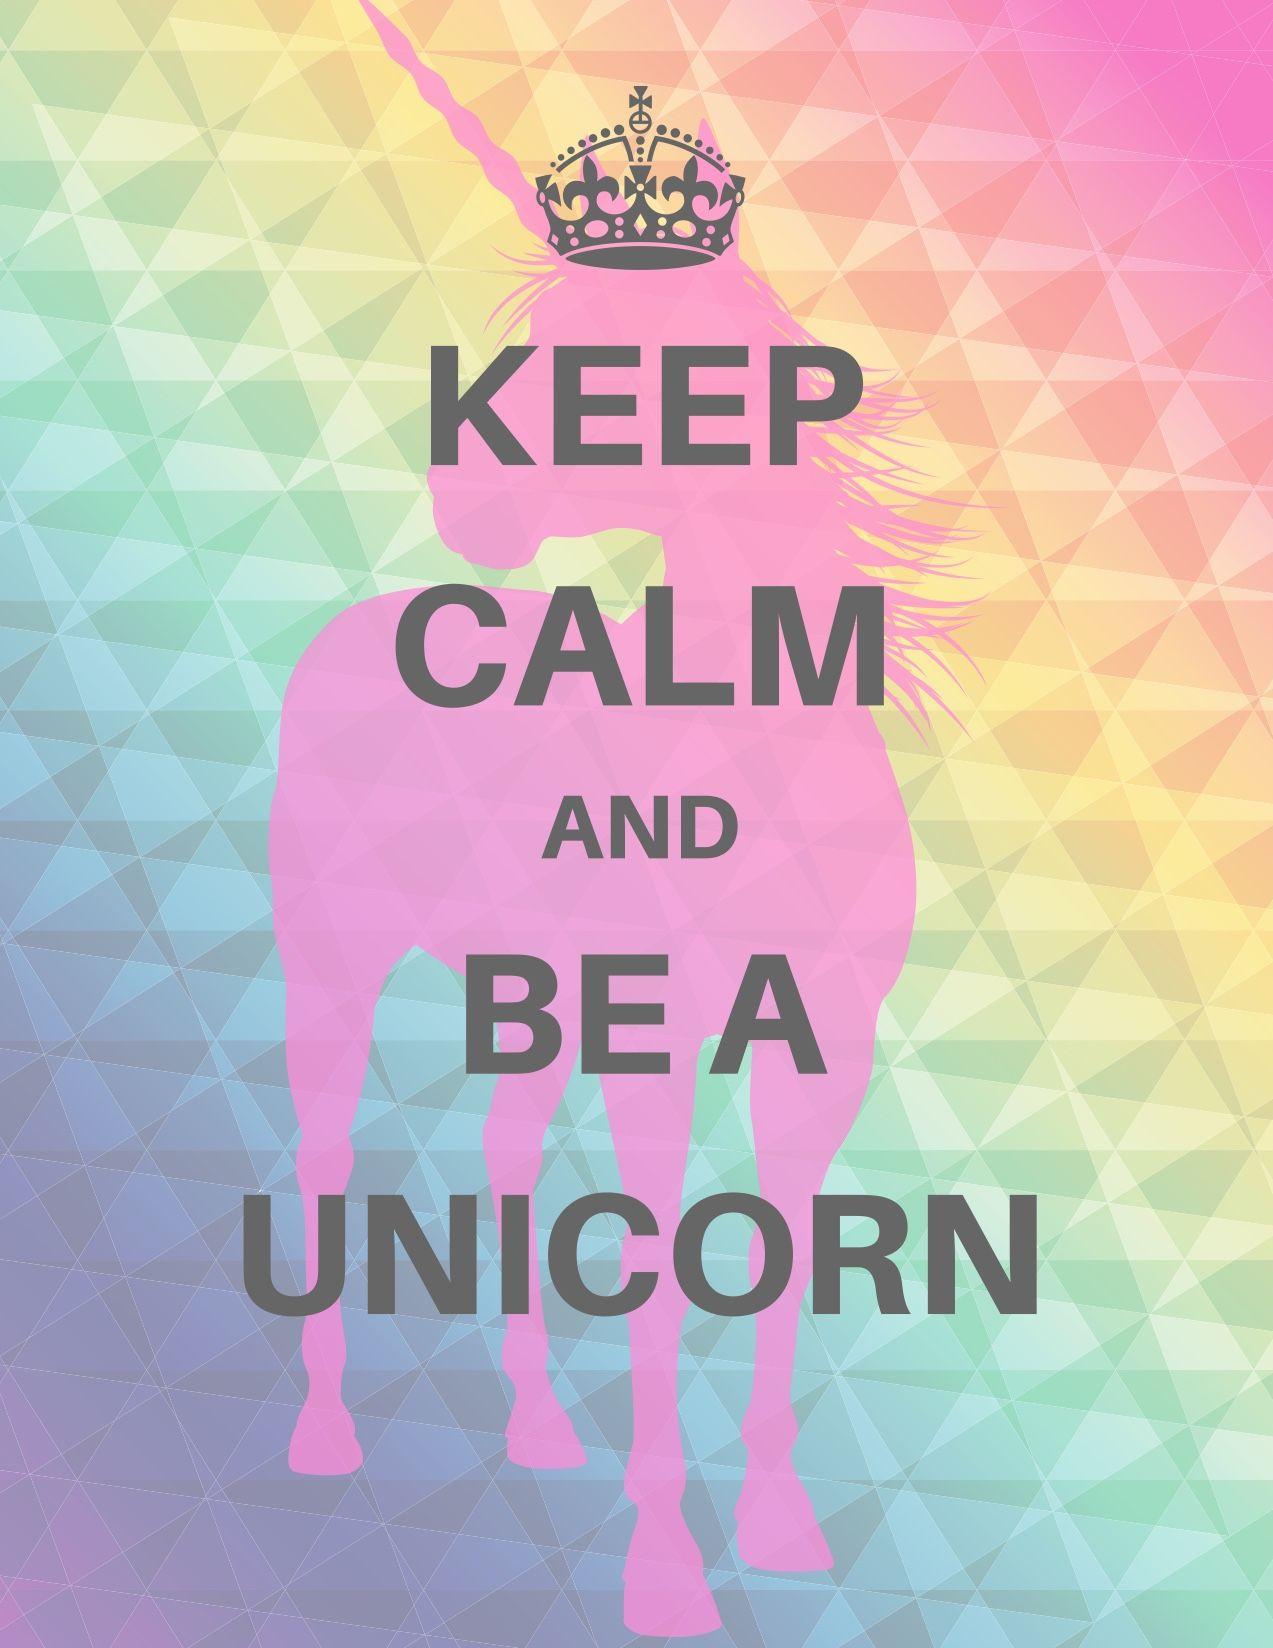 Keep calm and be a unicorn. Unicorn wallpaper cute